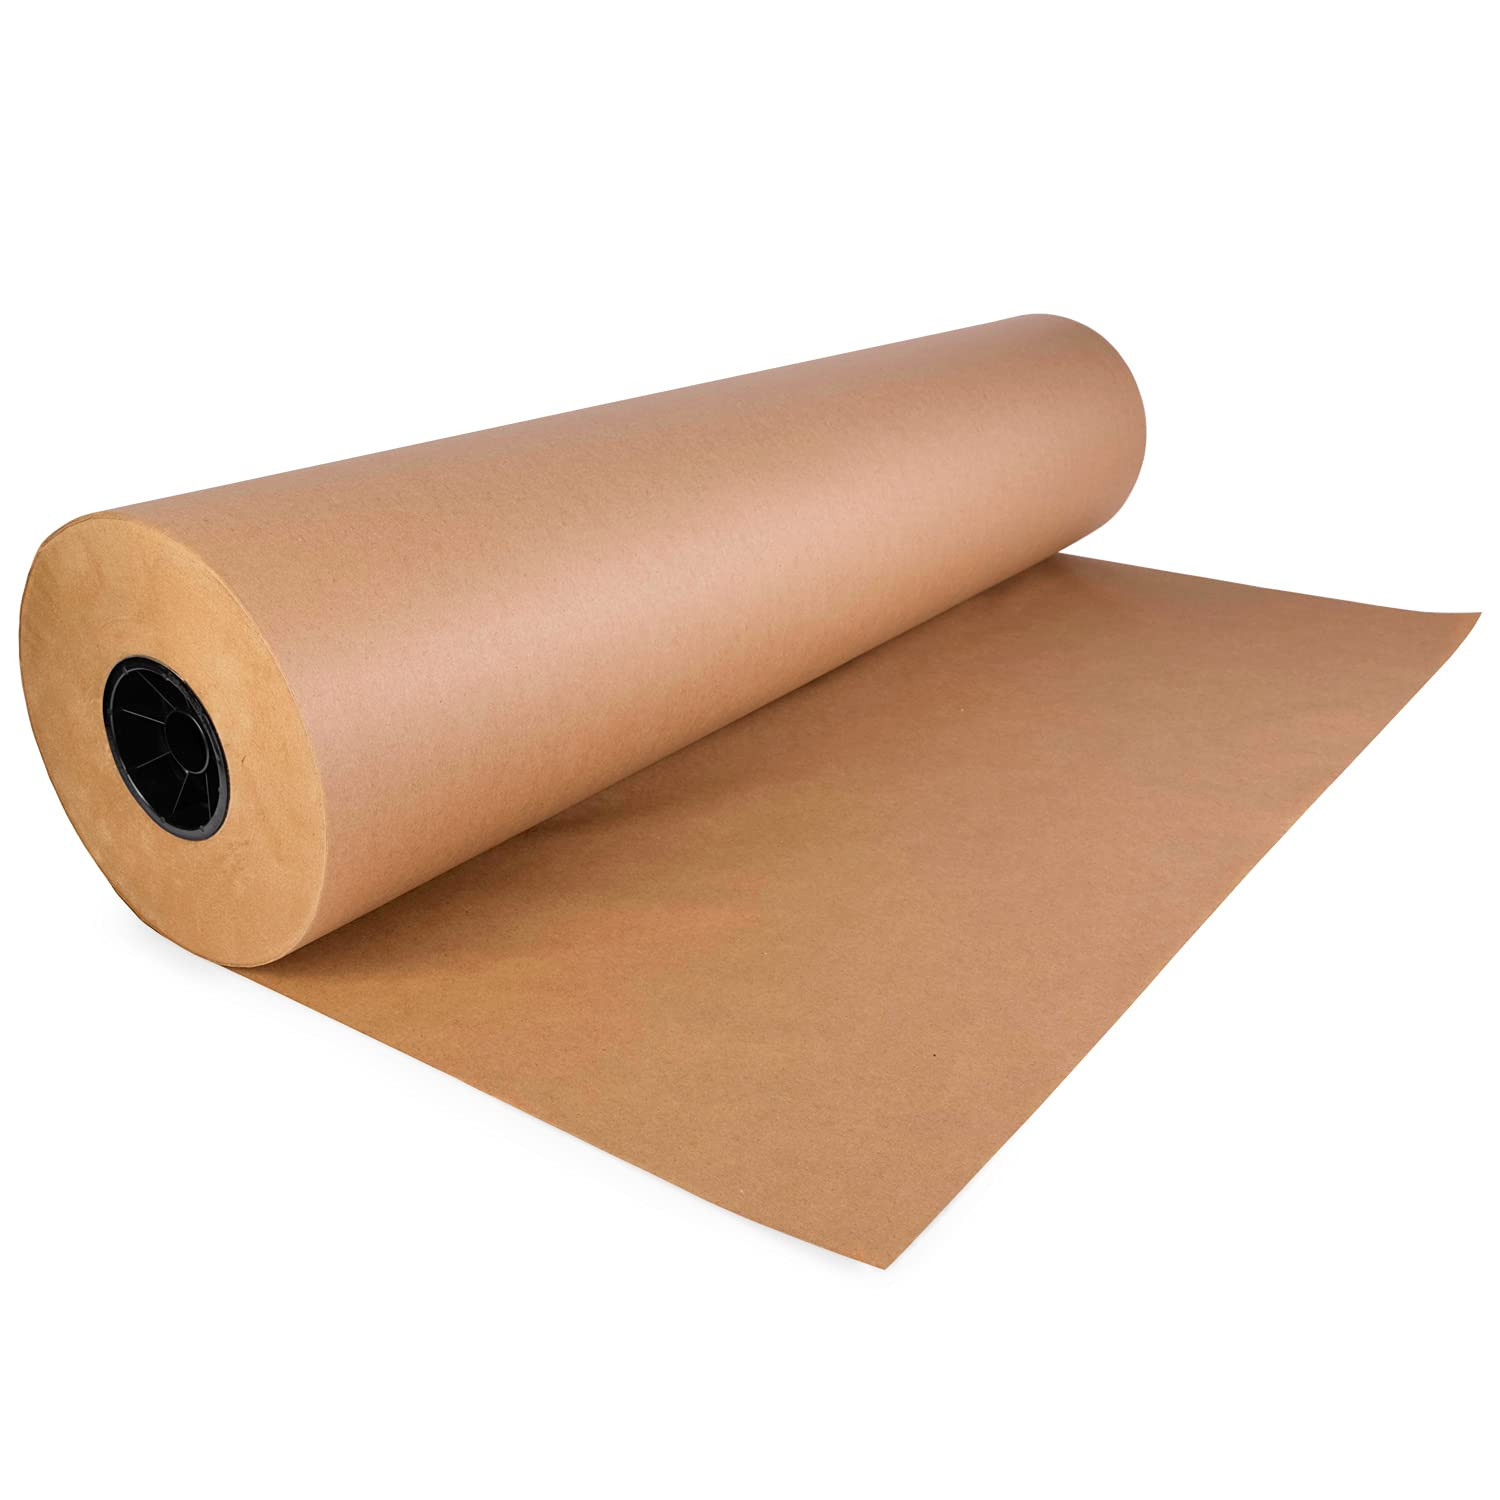  Large Brown Kraft Paper Roll - 36 x 1200 (100 ft